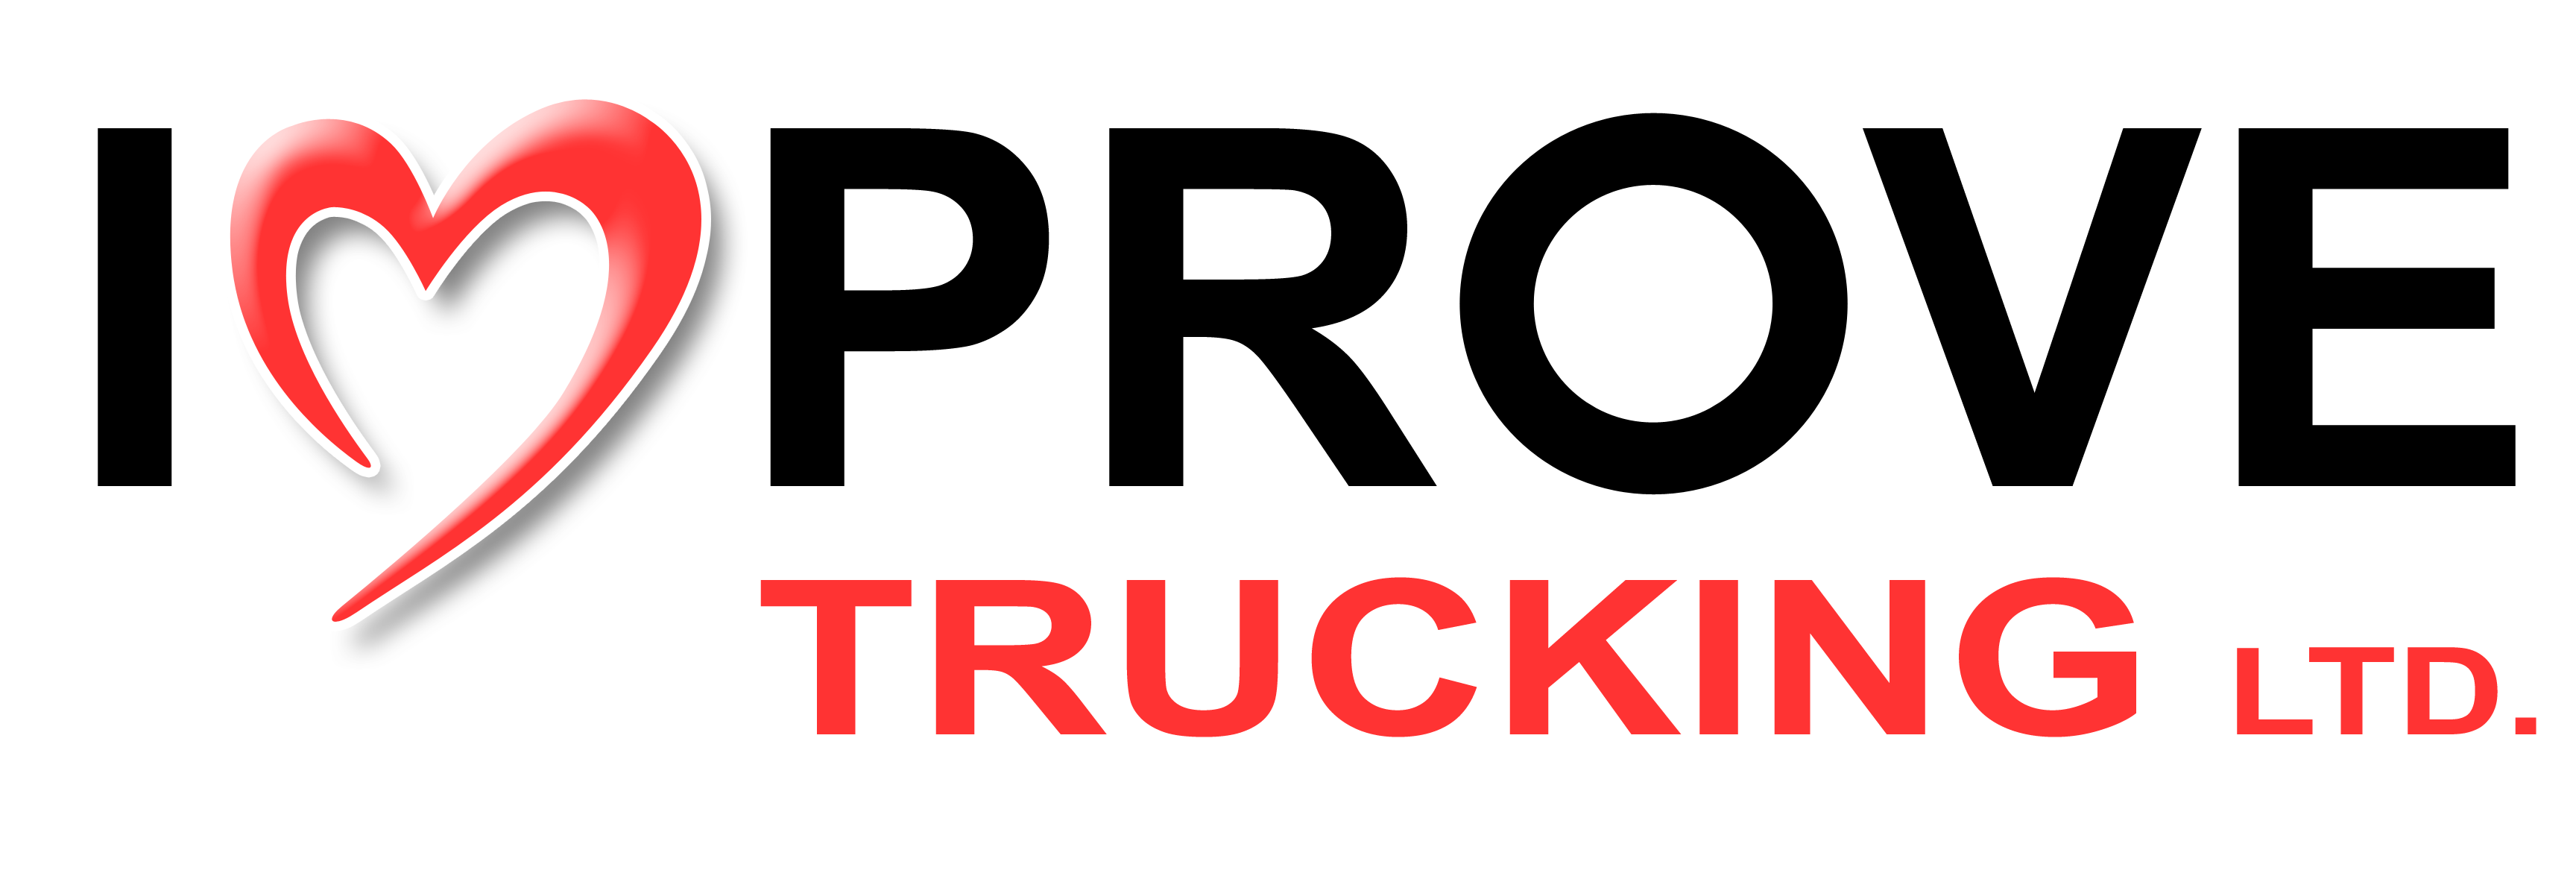 Improve Trucking Ltd Logo